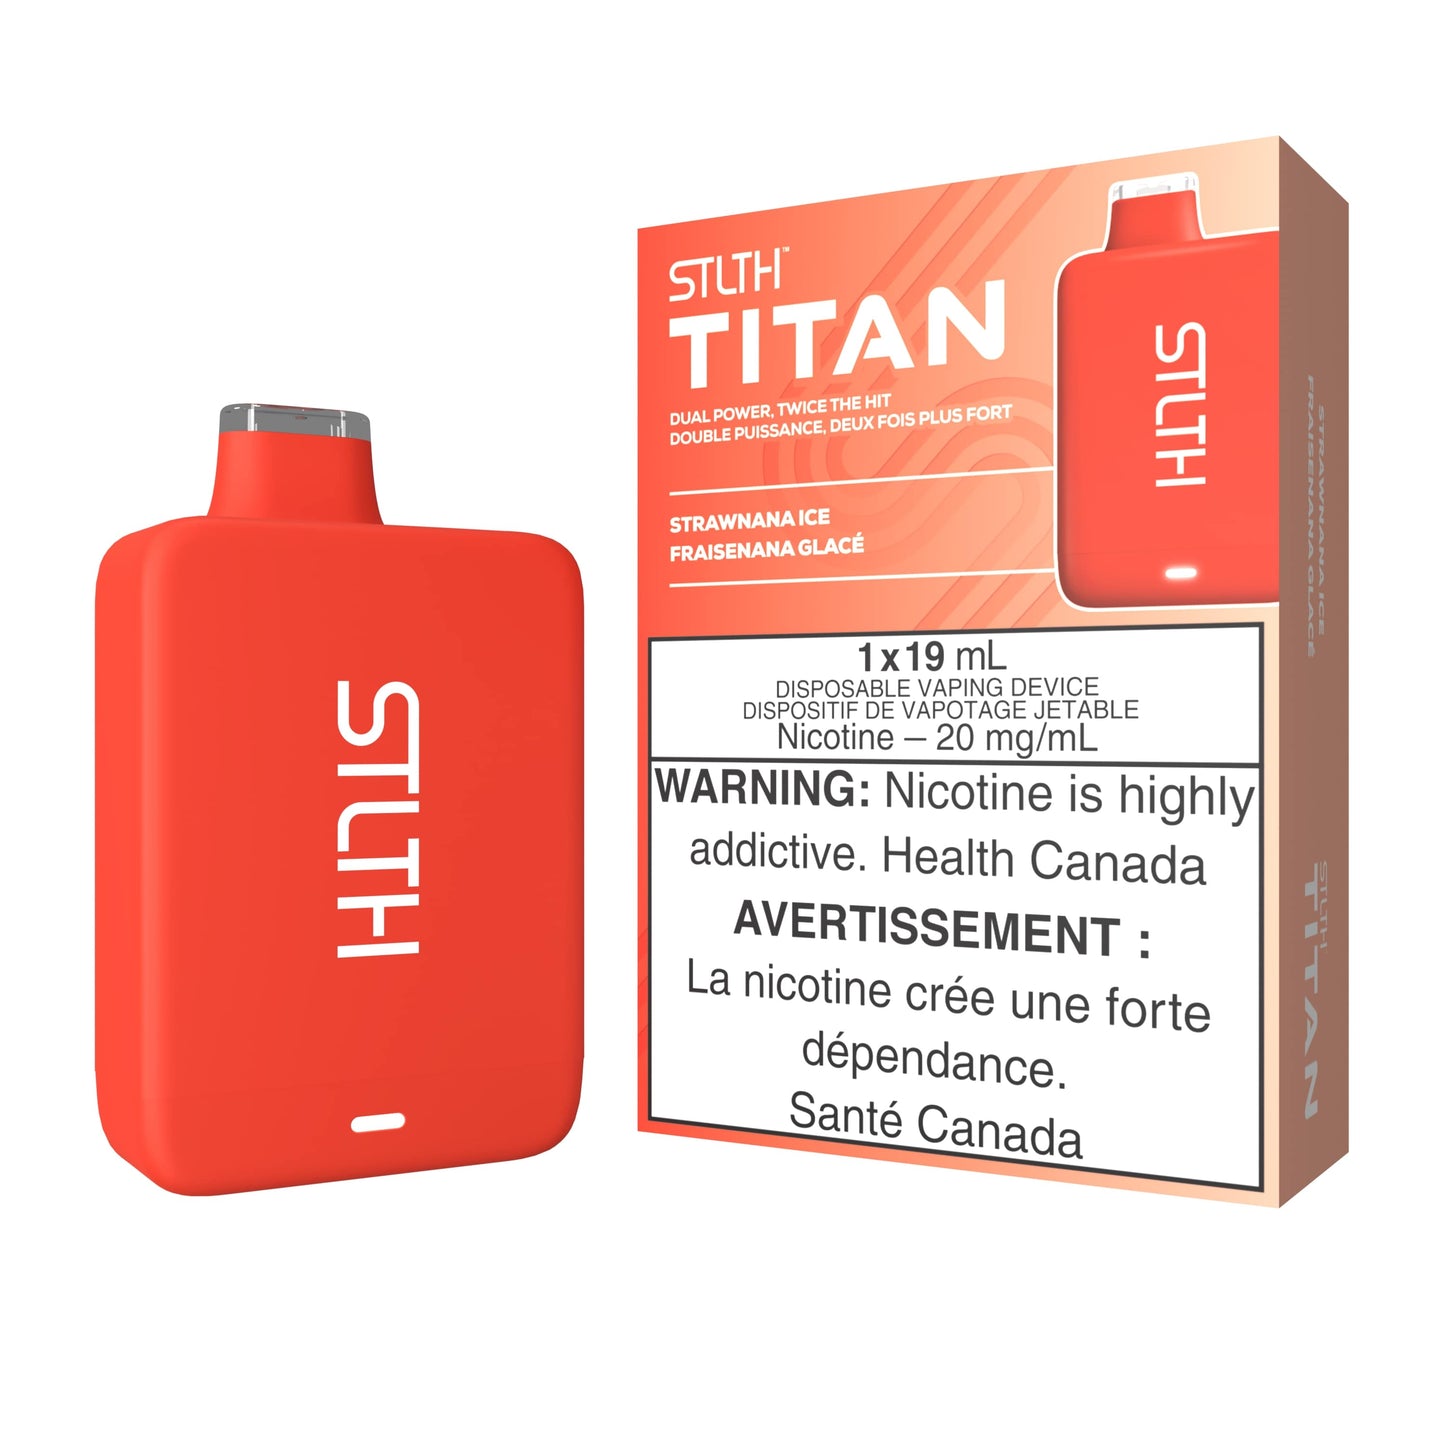 STLTH Titan - Strawnana Ice (Pack of 5)